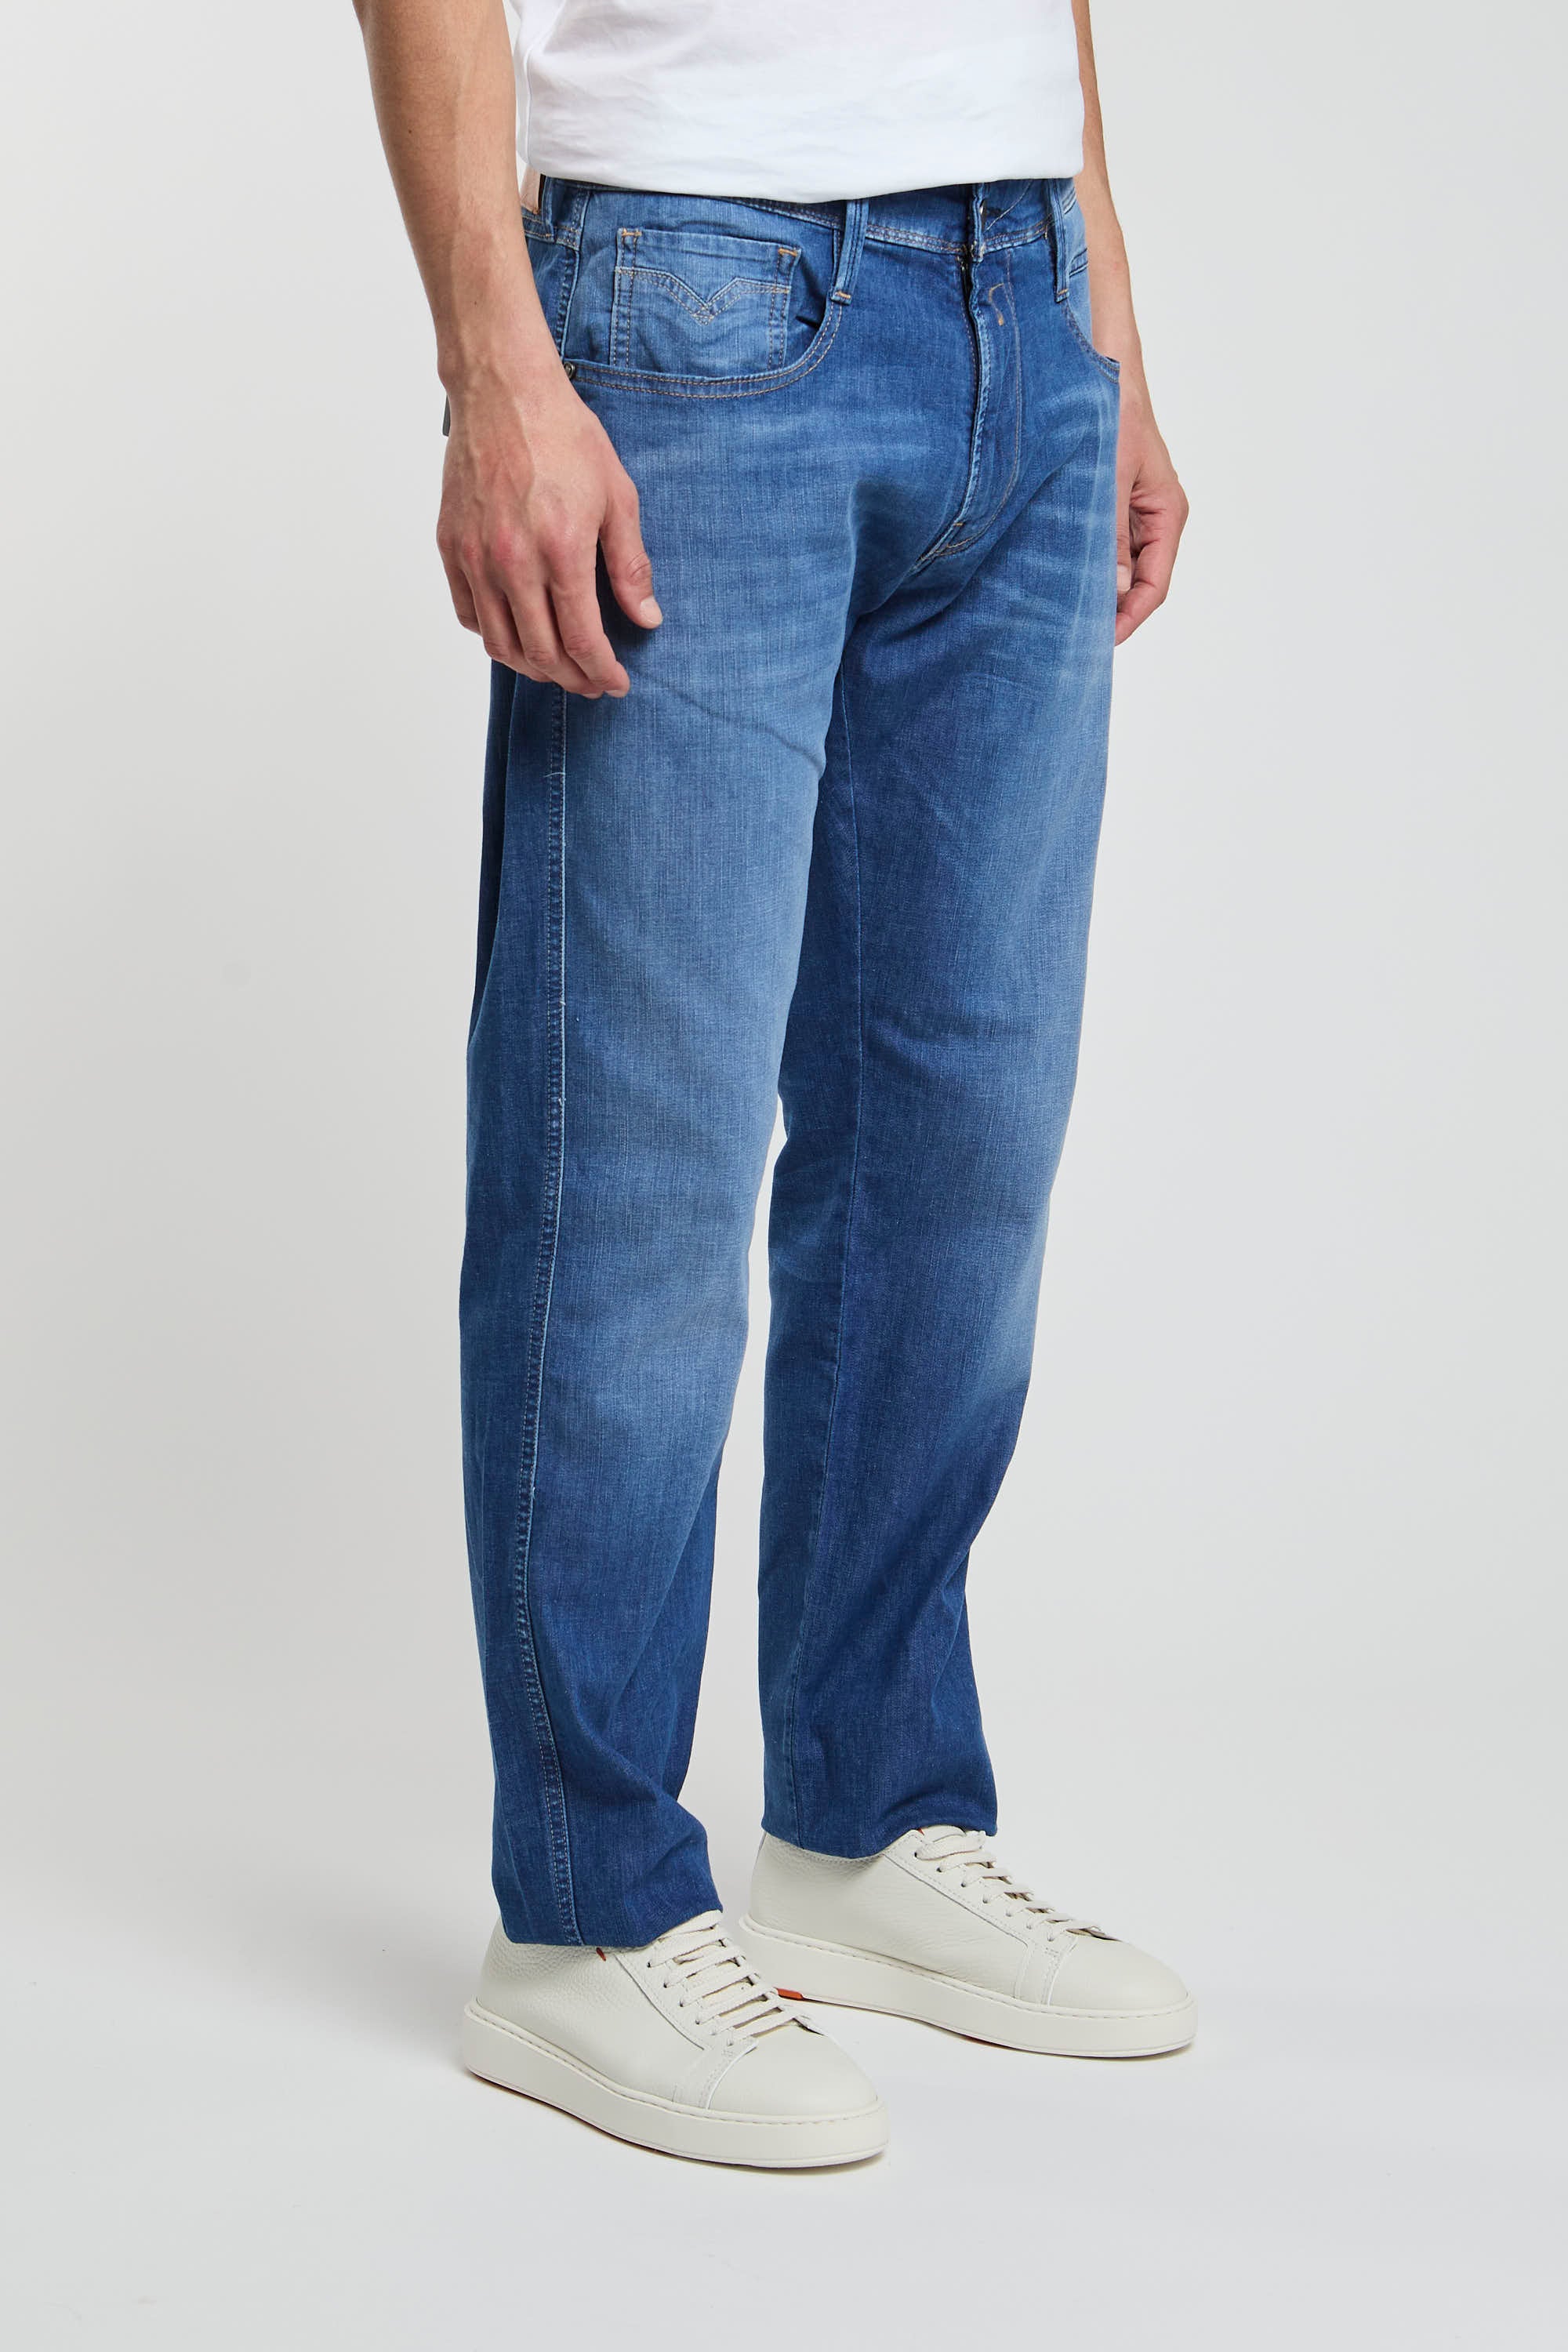 Replay Slim Fit Jeans Denim Made of Cotton/Lyocell/Elastomultiester/Elastane-3